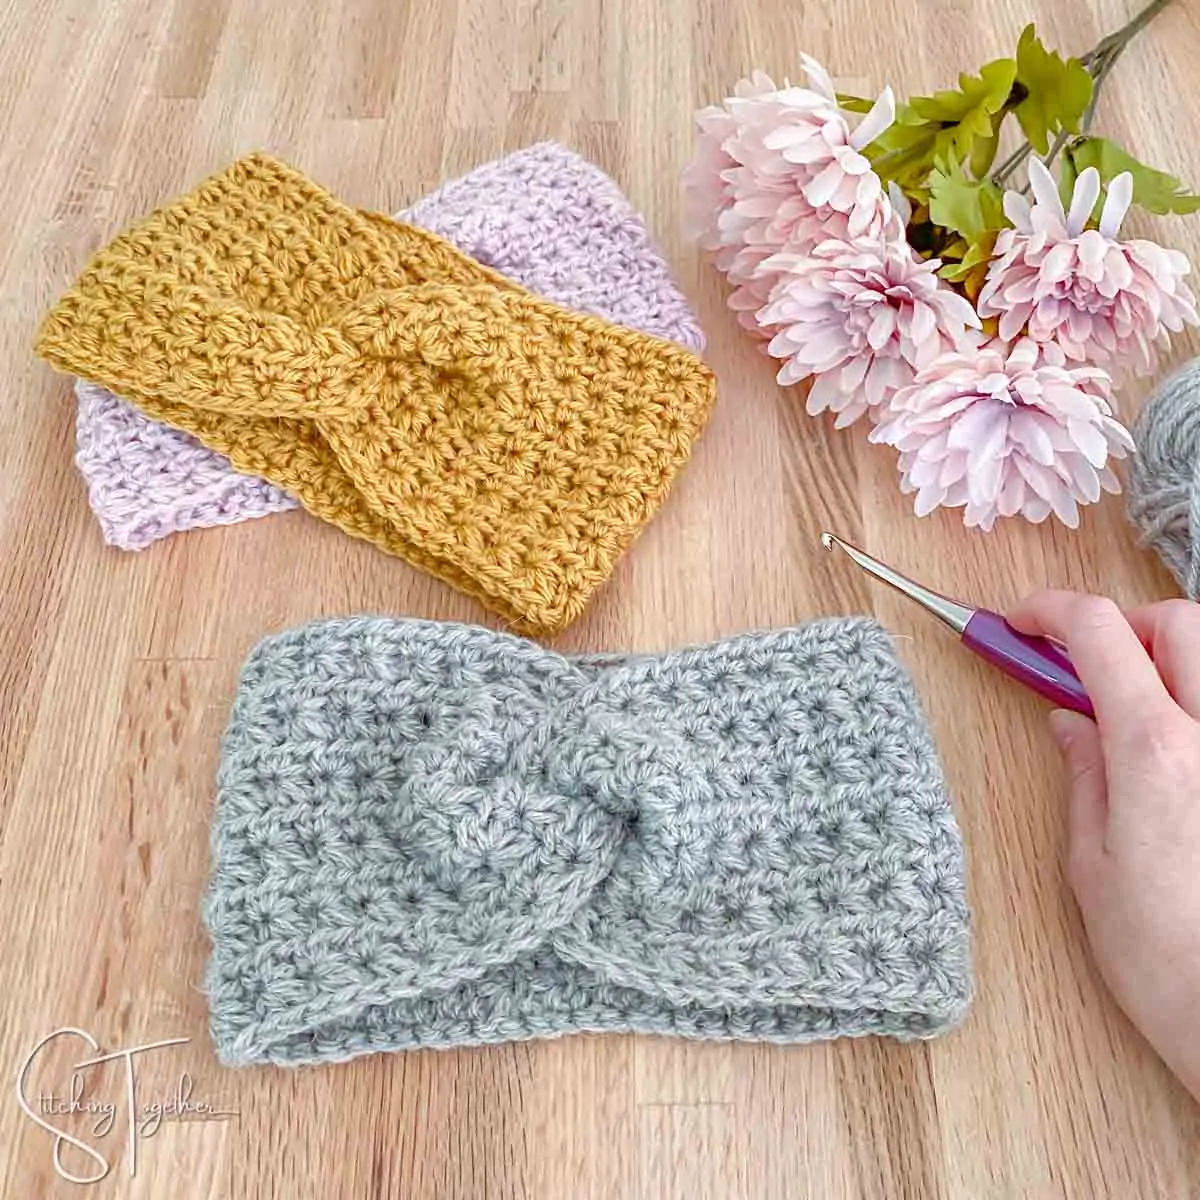 3 twist crochet headbands with a crochet hook and flowers